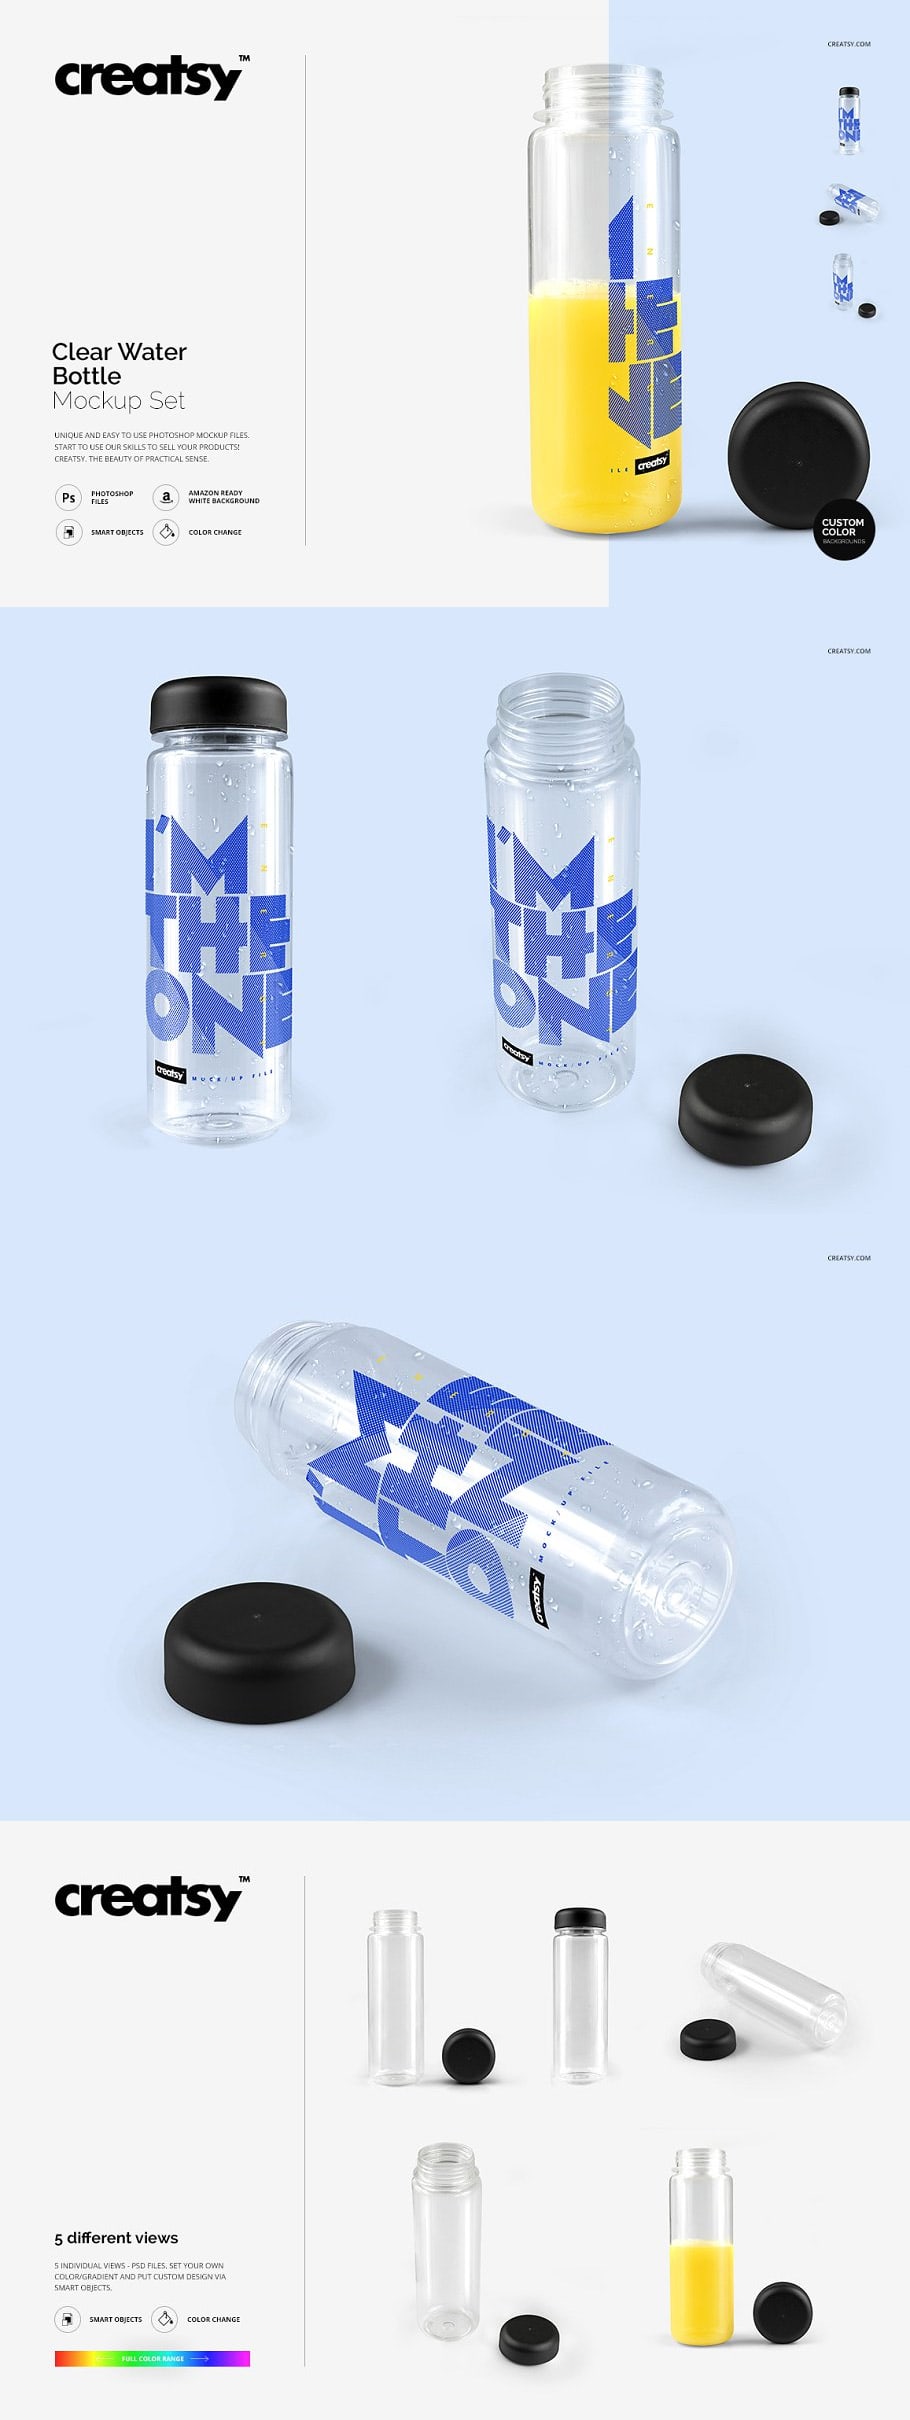 https://mockupsfreebies.com/wp-content/uploads/2019/09/Water-Bottle-Mockup-Set-min.jpg